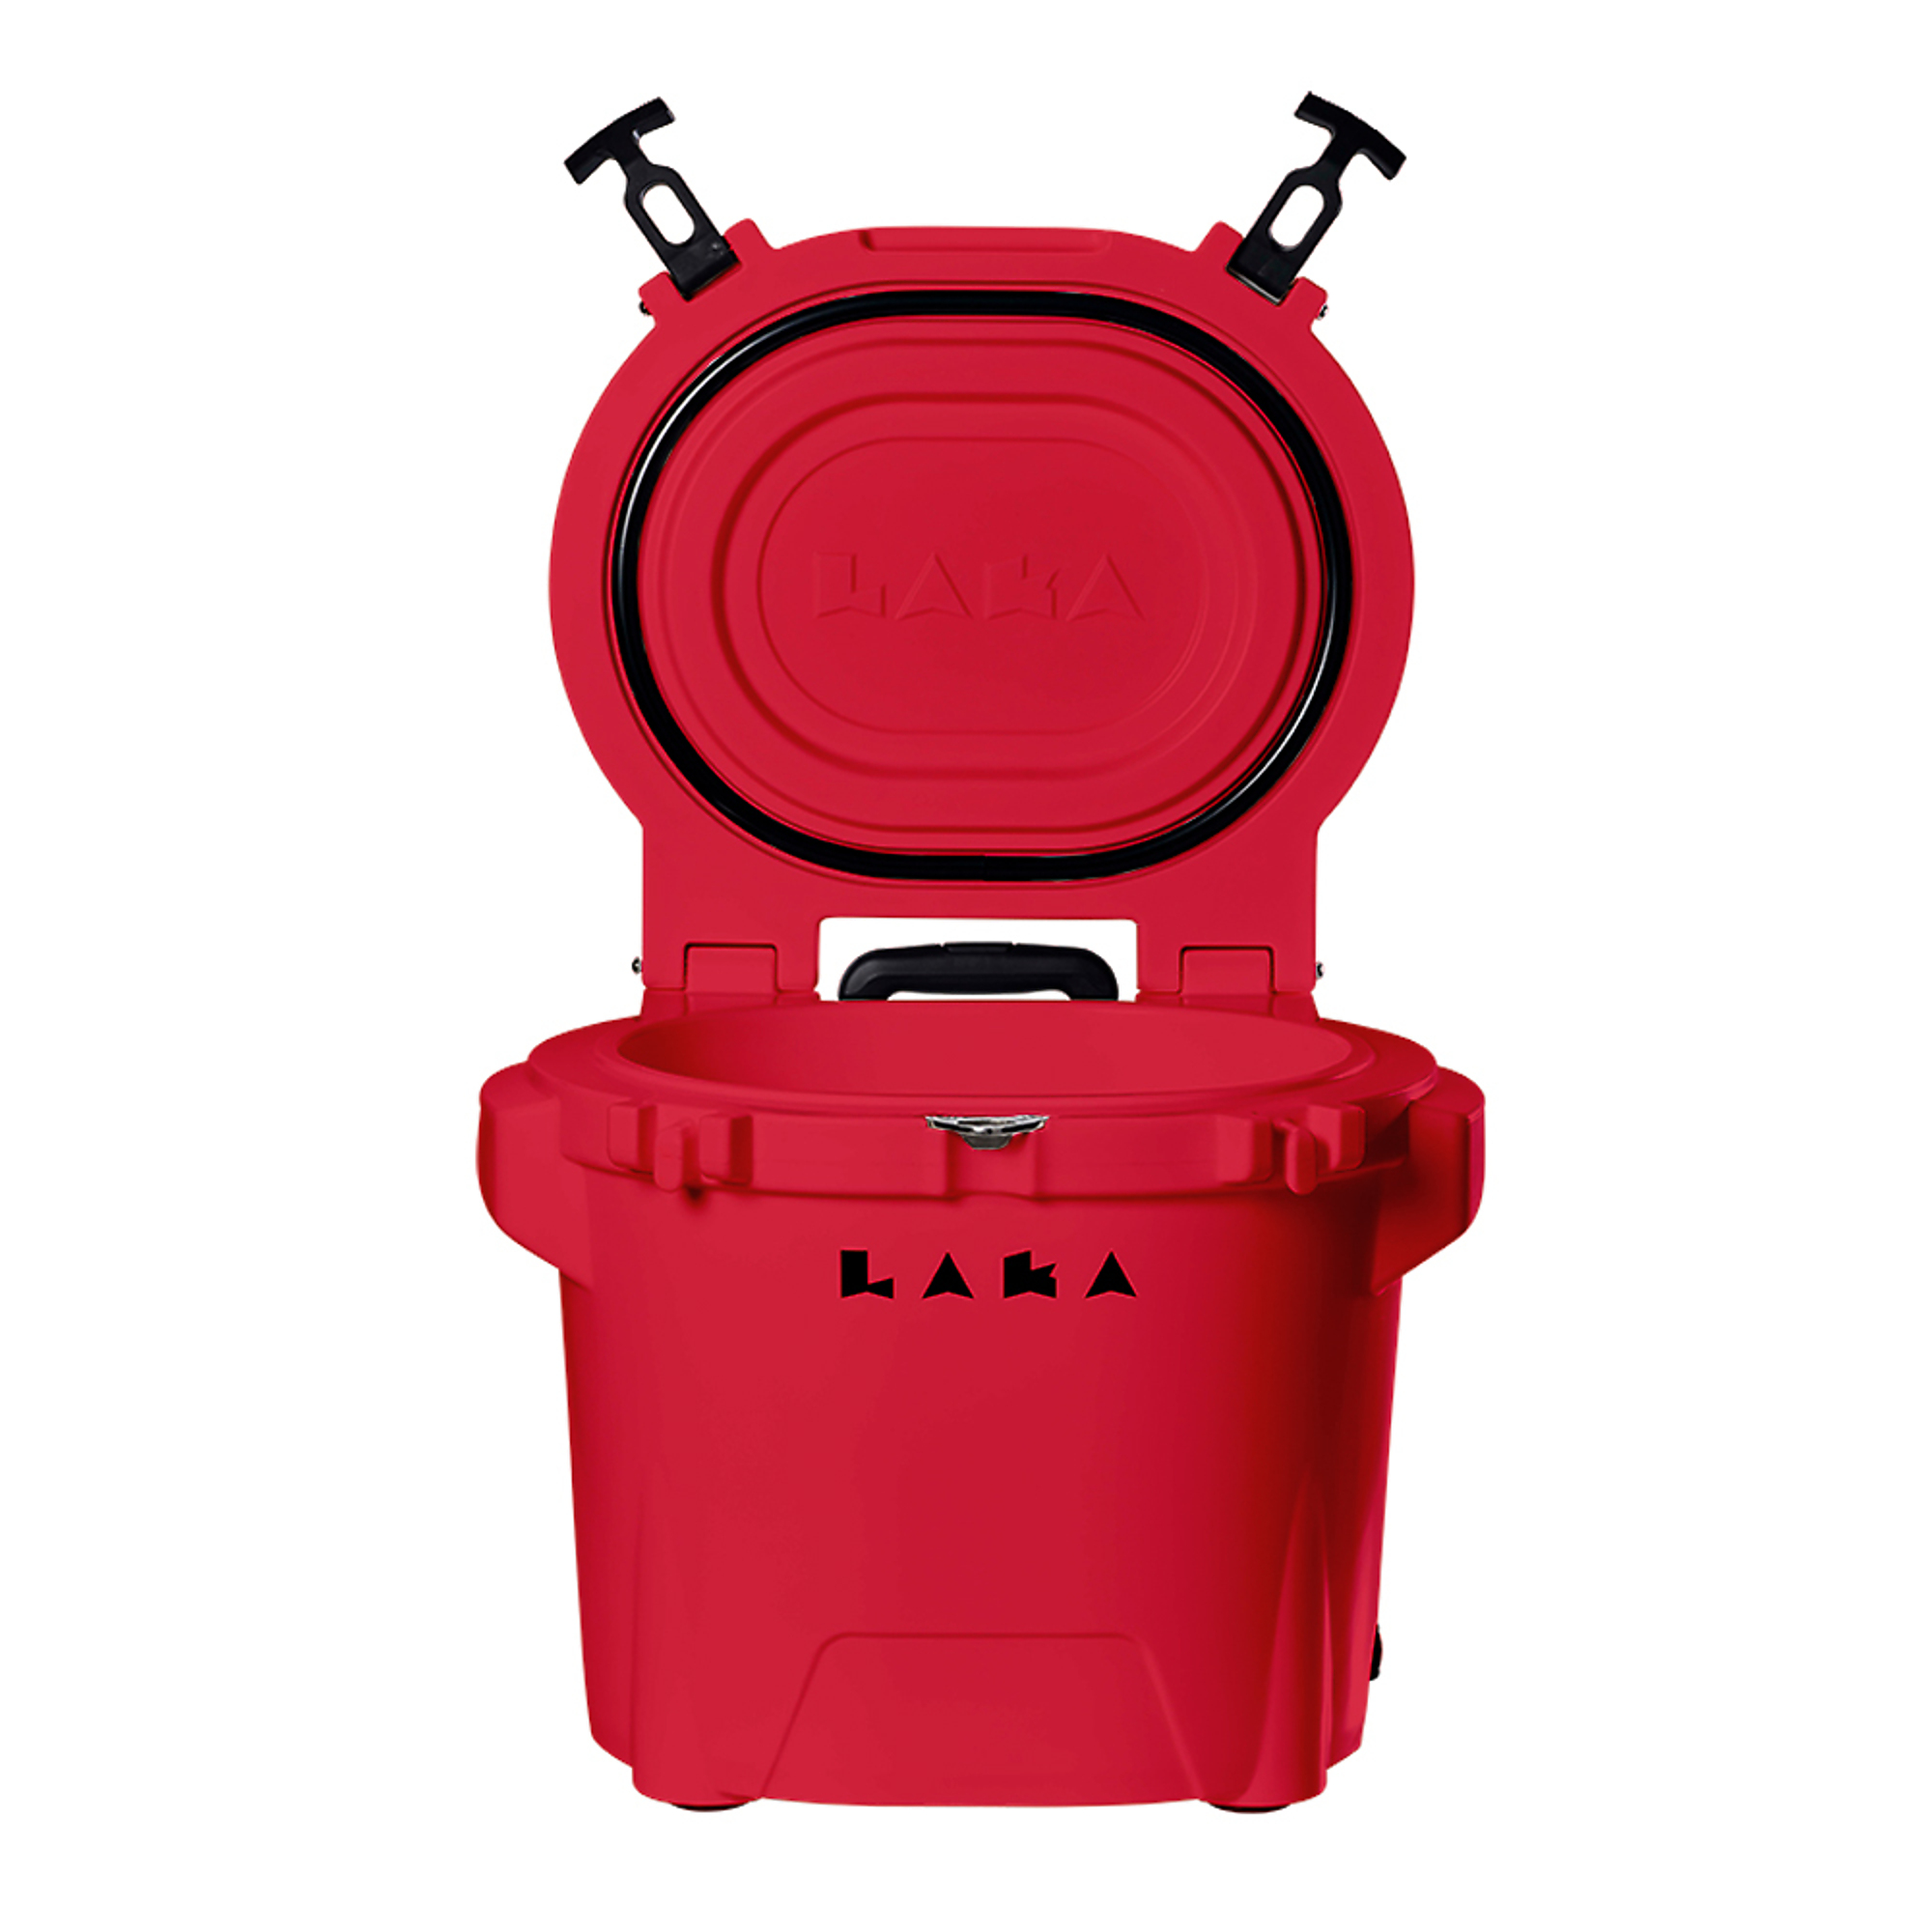 LAKA Cooler, Telescoping Handle, Rubber Wheels, Air-Tight, Capacity 7.5 Gal, Model 1089